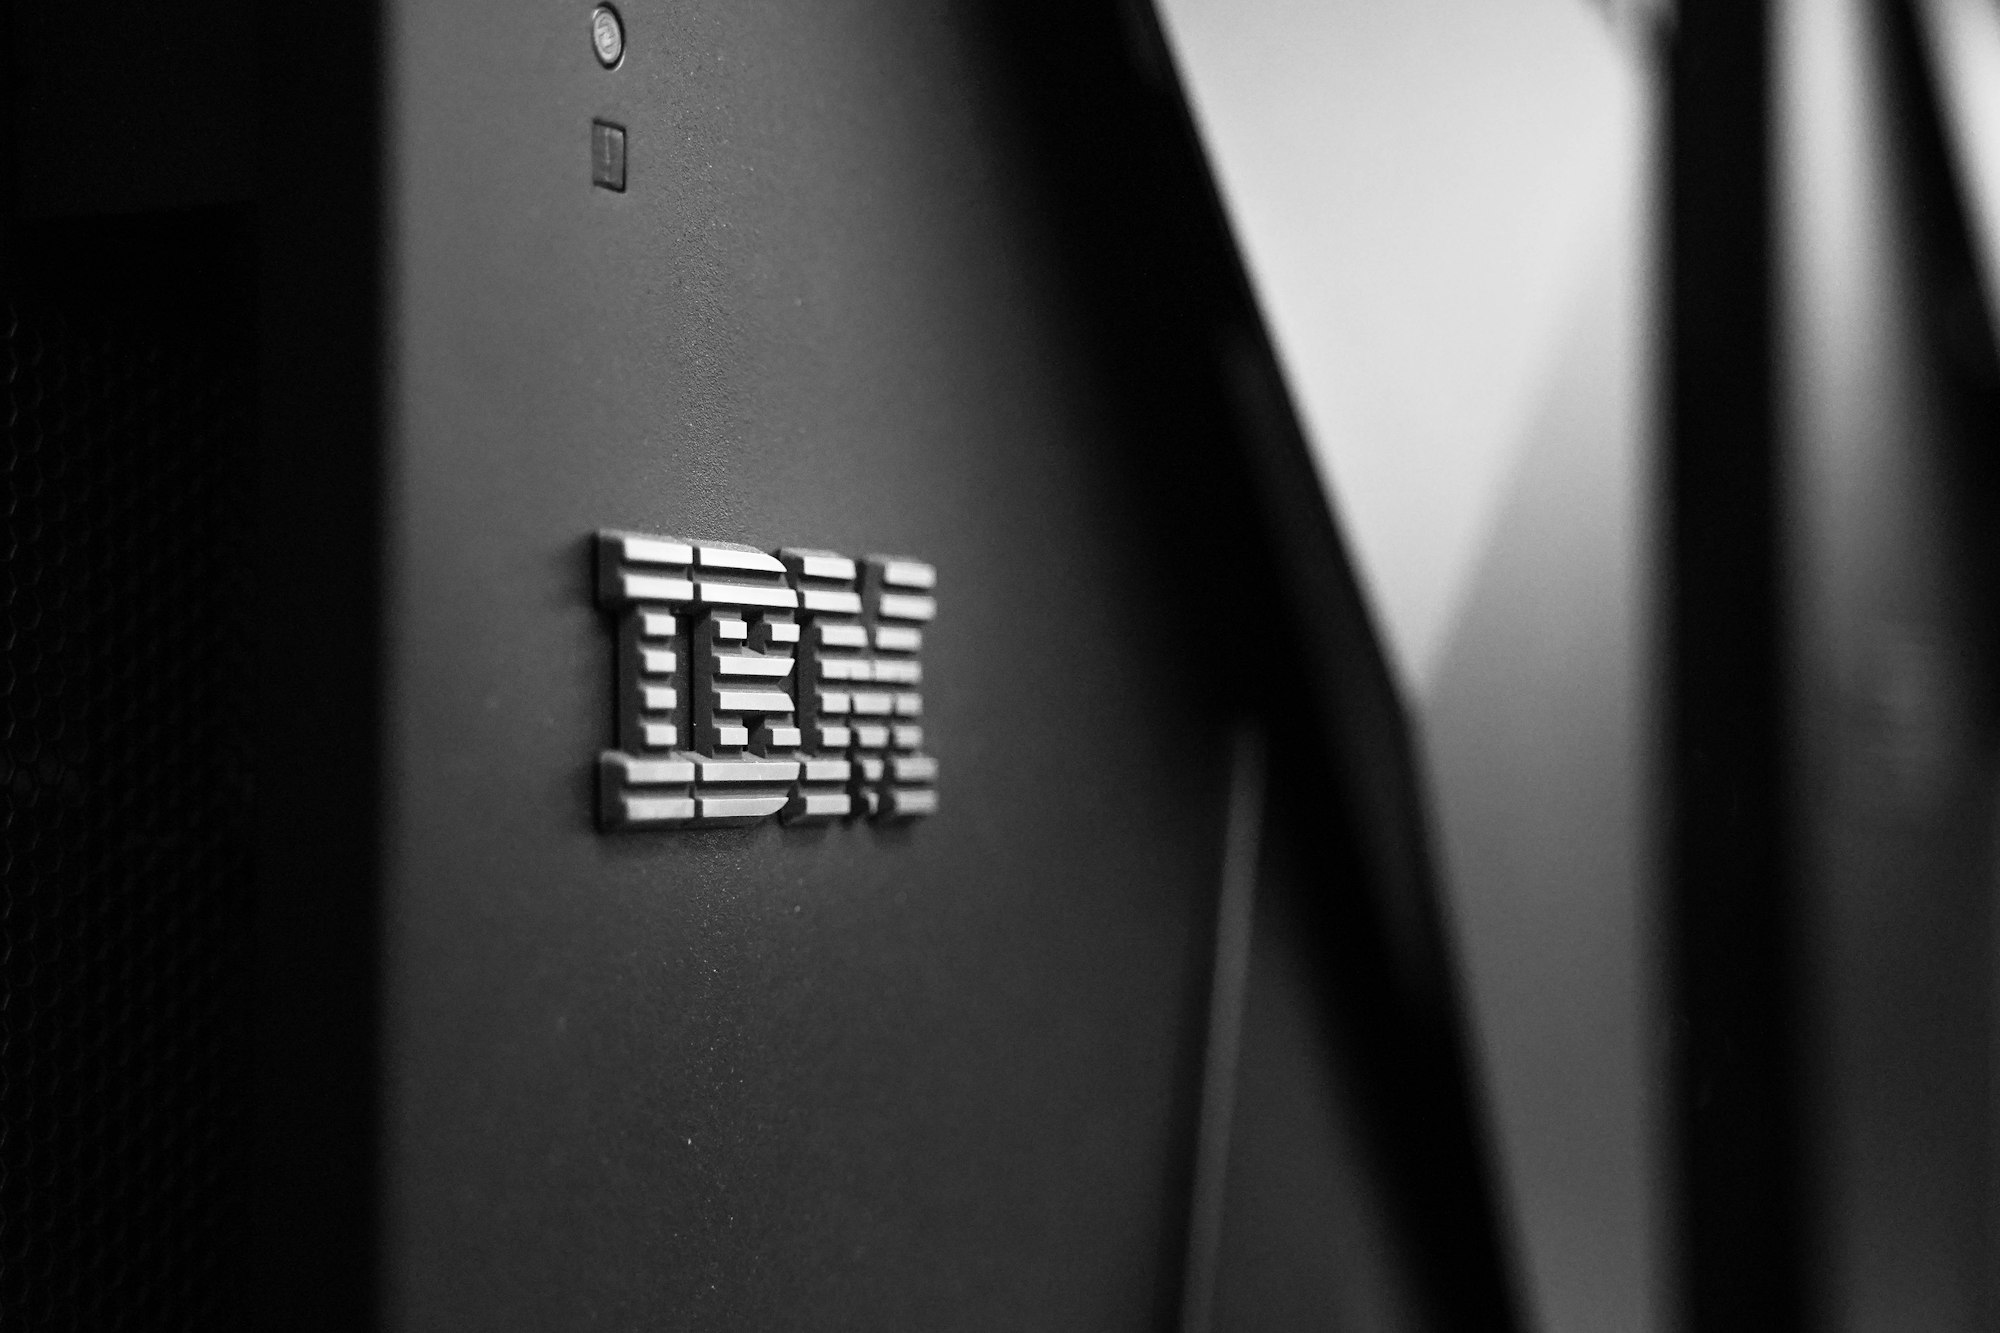 Despite revenue growth, IBM plans to cut 3,900 jobs